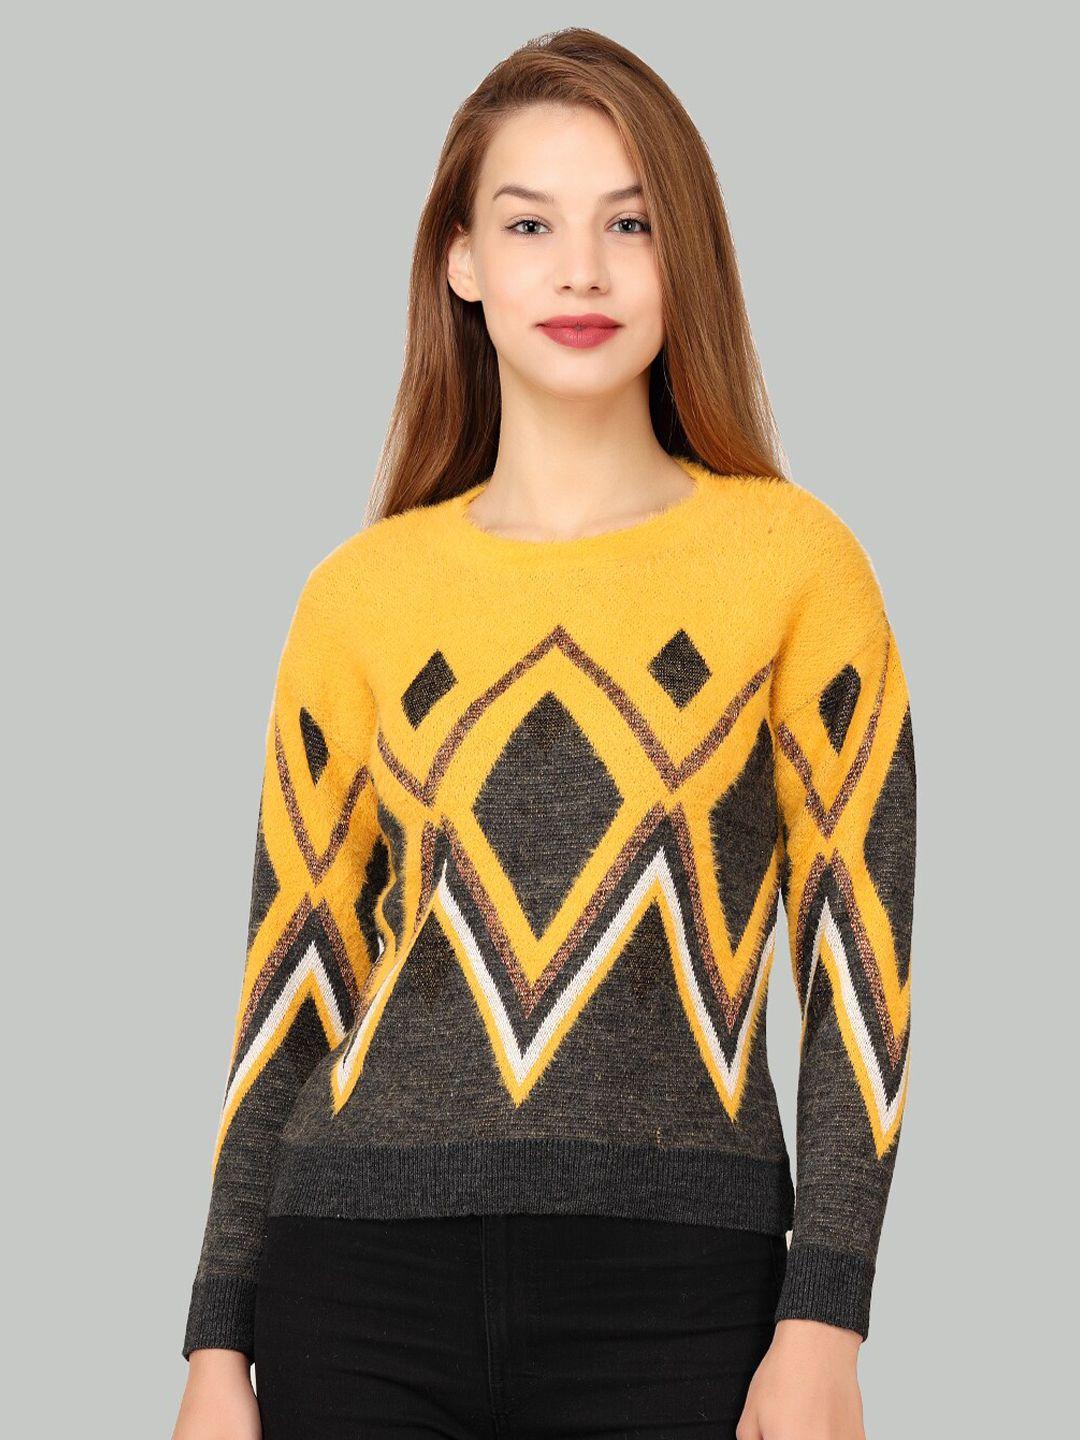 la-vita yellow geometric printed drop-shoulder relaxed fit woollen top